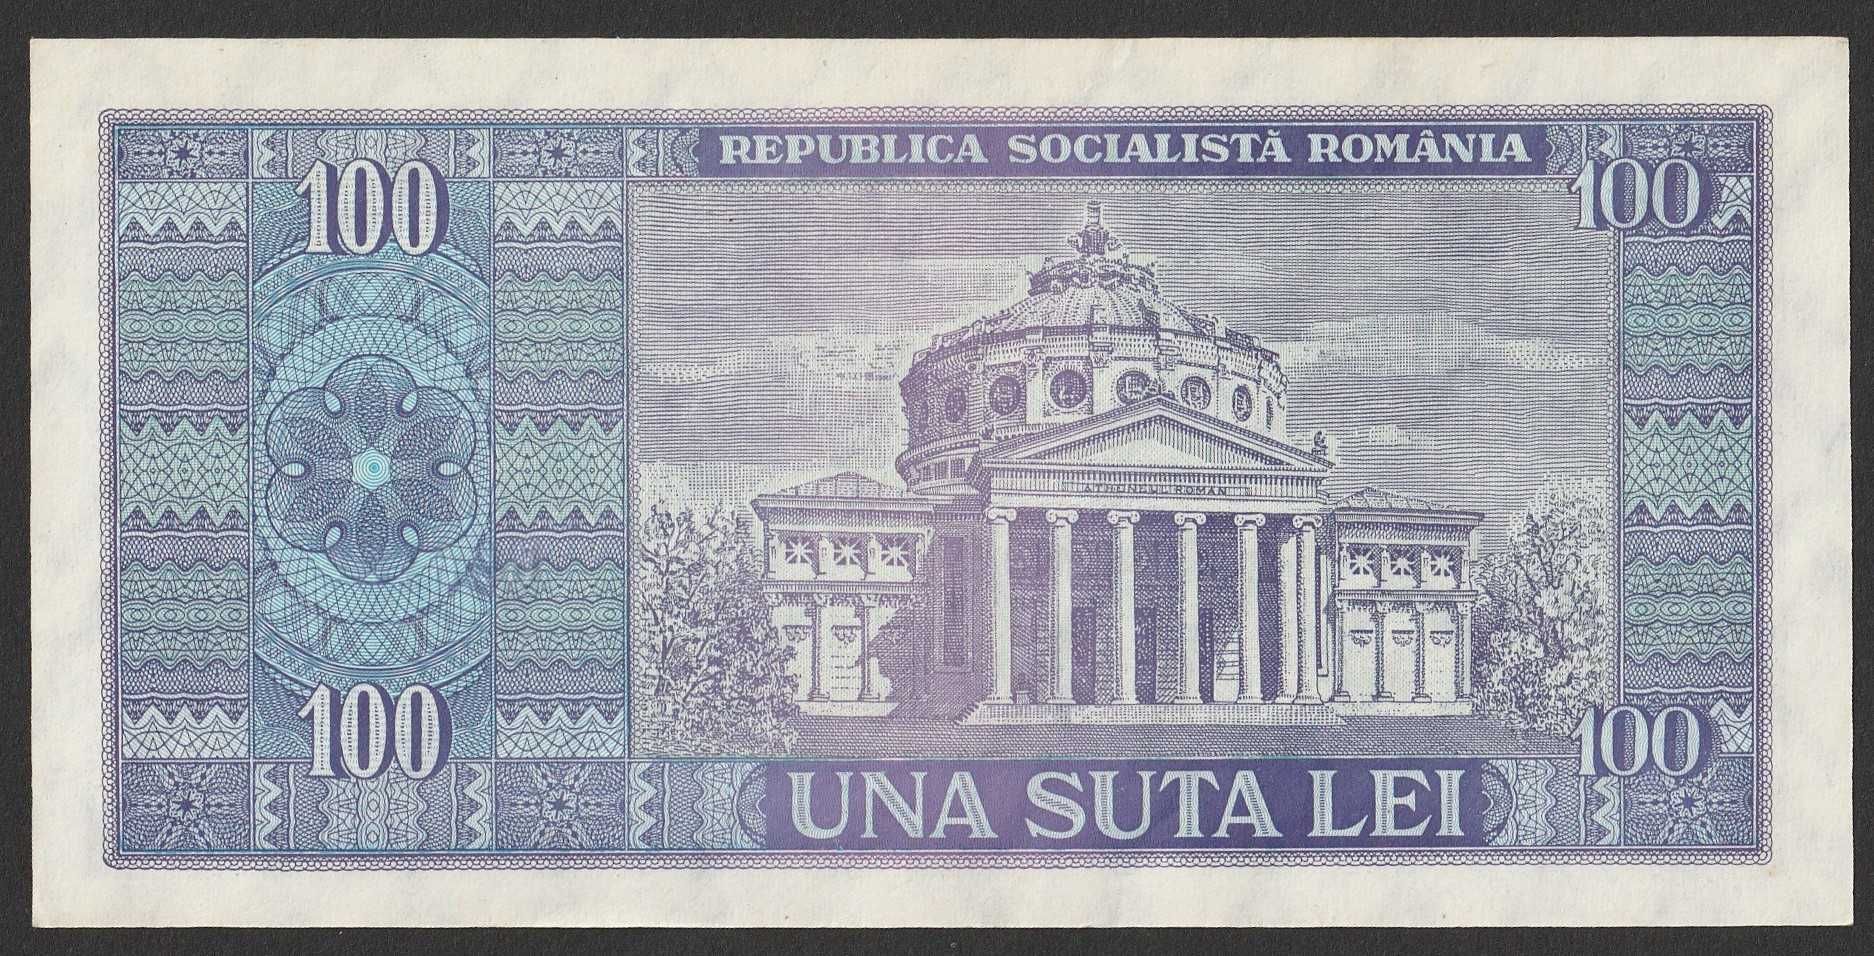 Rumunia 100 lei 1966 - Nicolae Balcescu - stan bankowy UNC